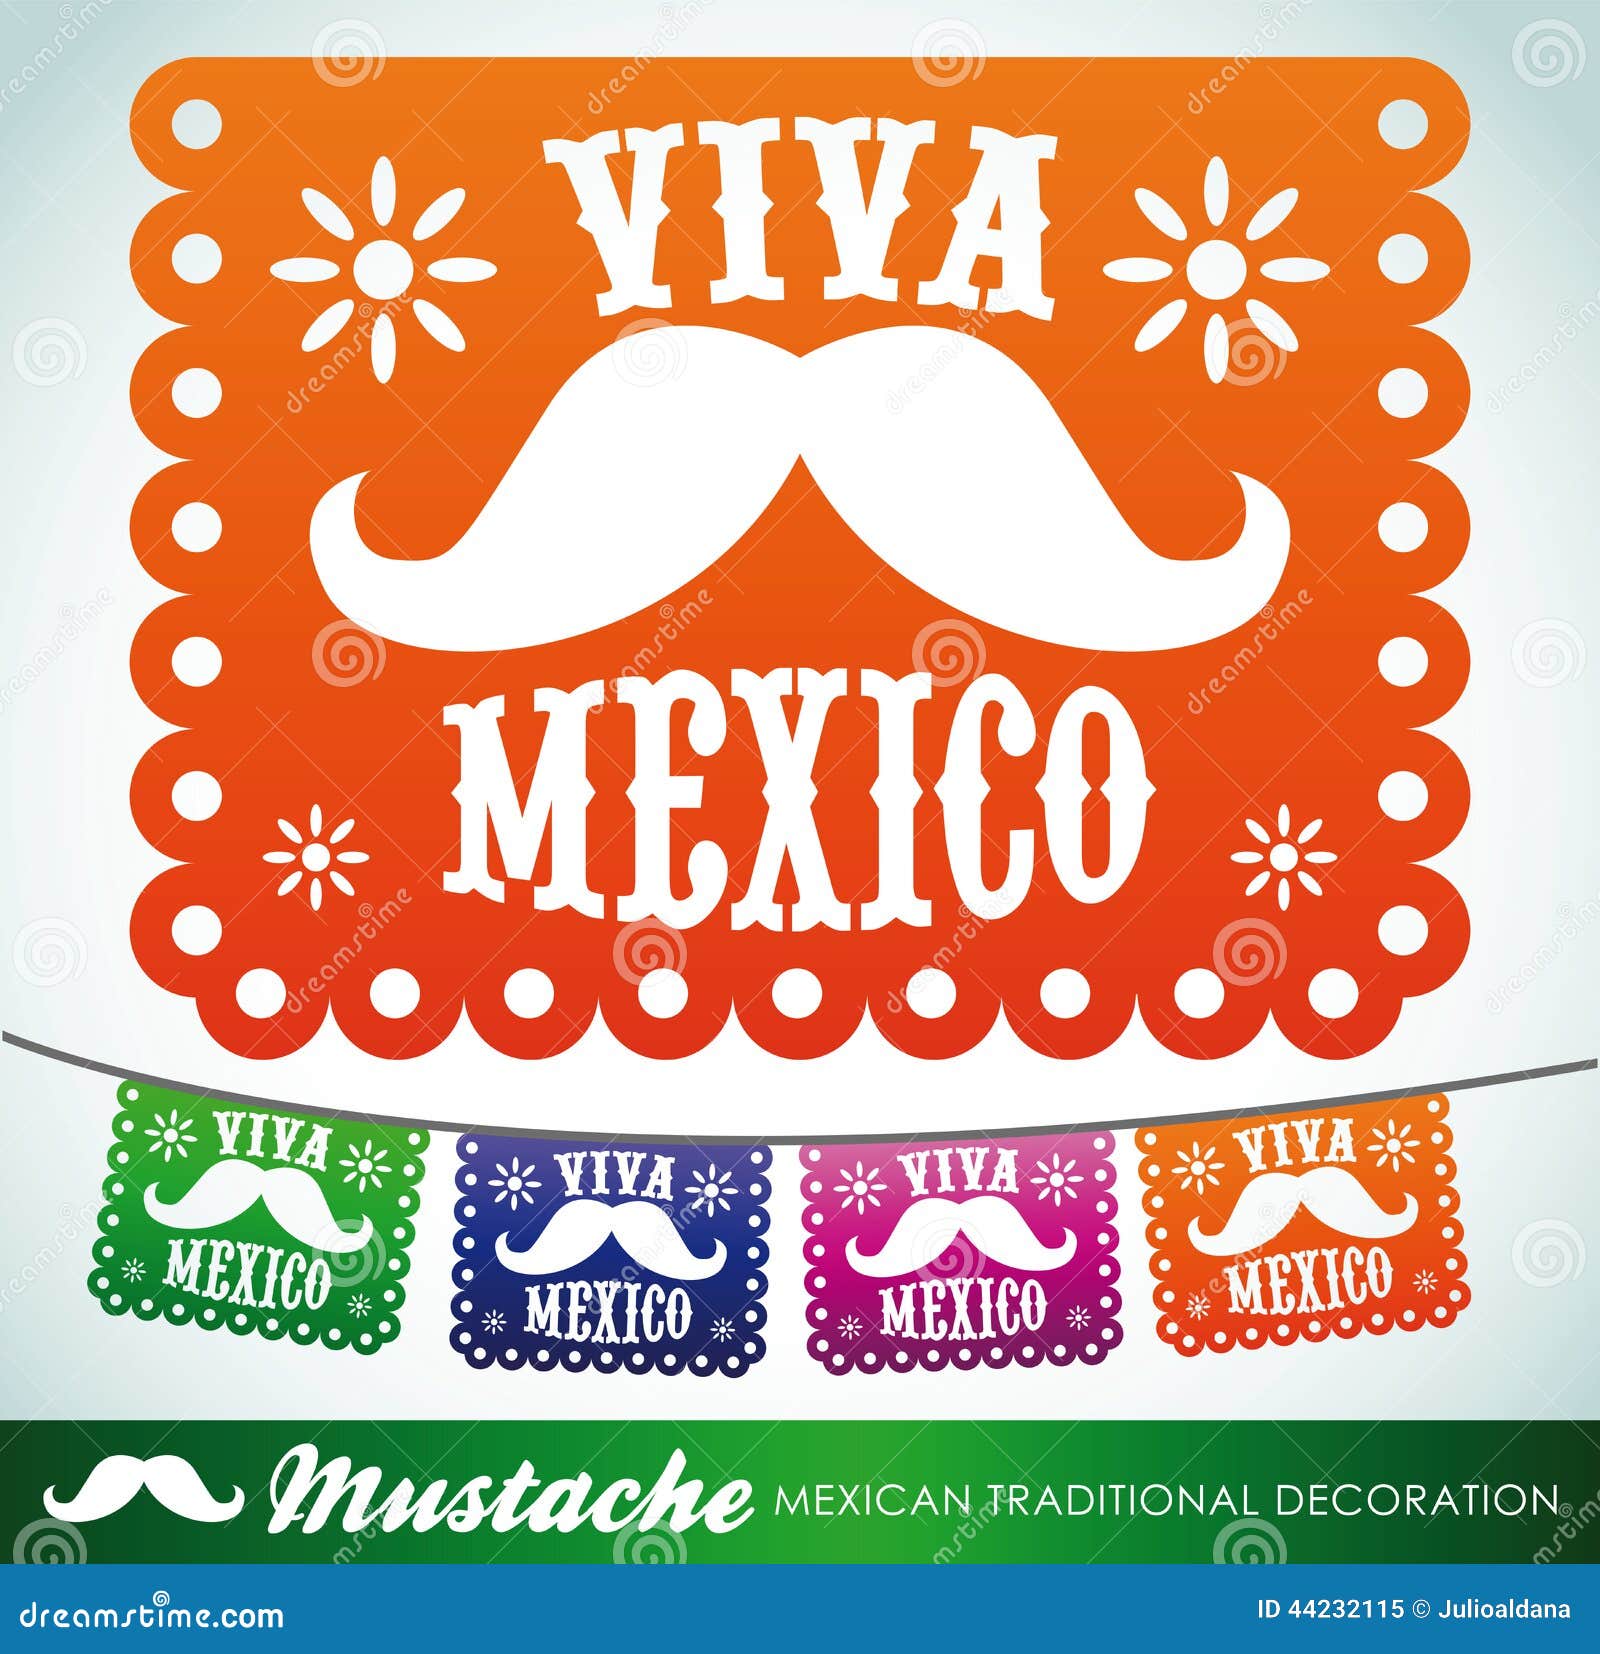 viva mexico - mexican mustache holiday